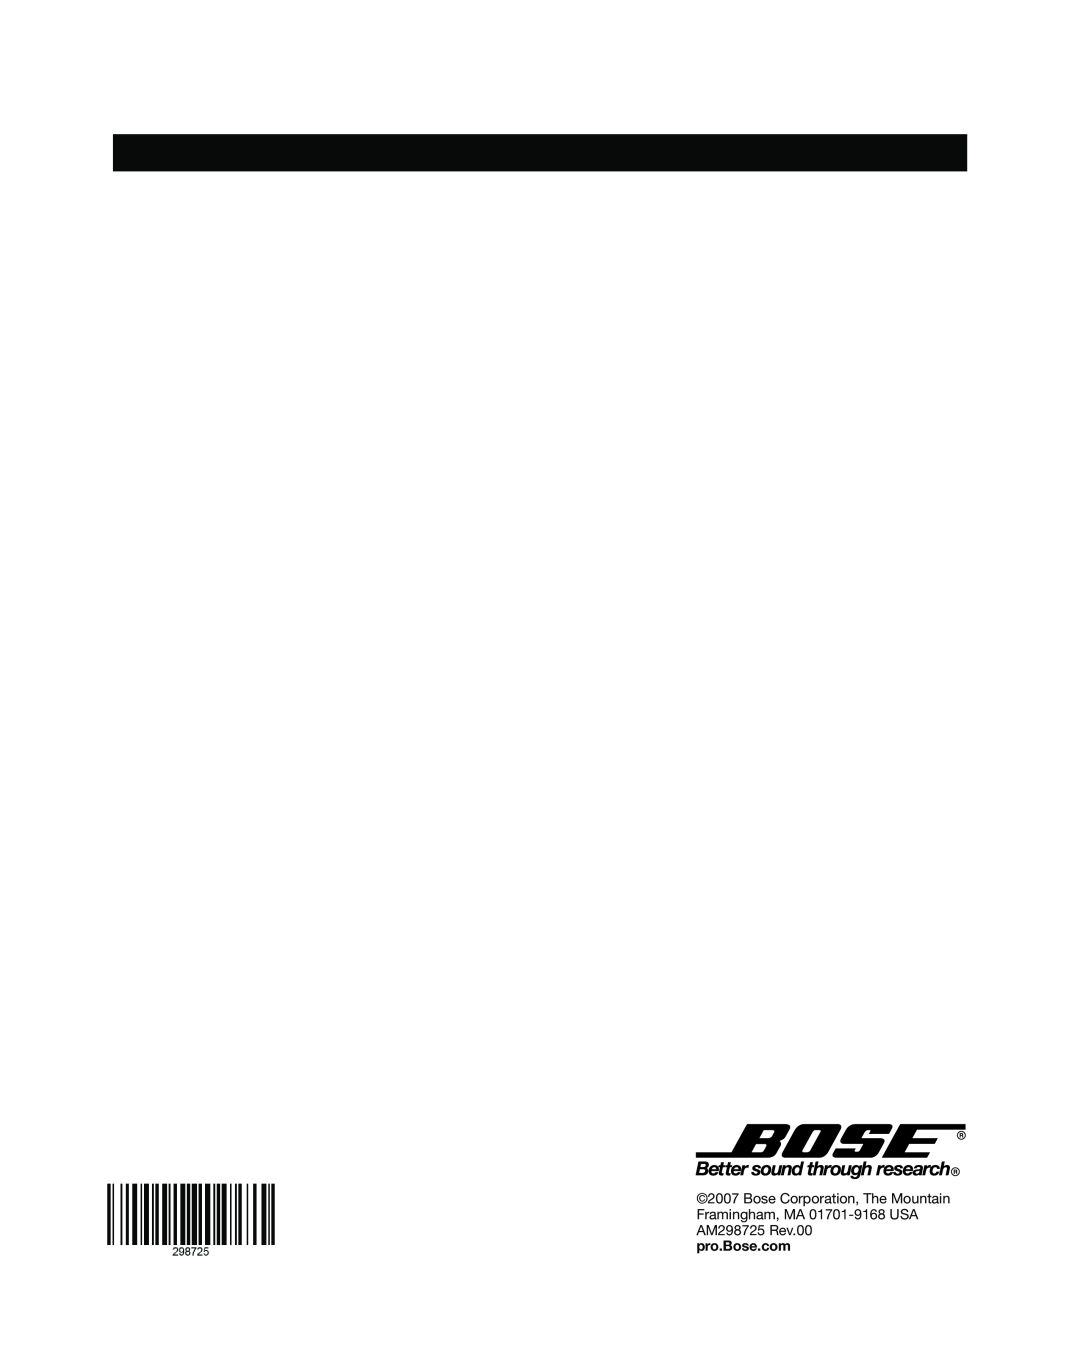 Bose DXA2120 manual Bose Corporation, The Mountain, Framingham, MA 01701-9168USA AM298725 Rev.00 